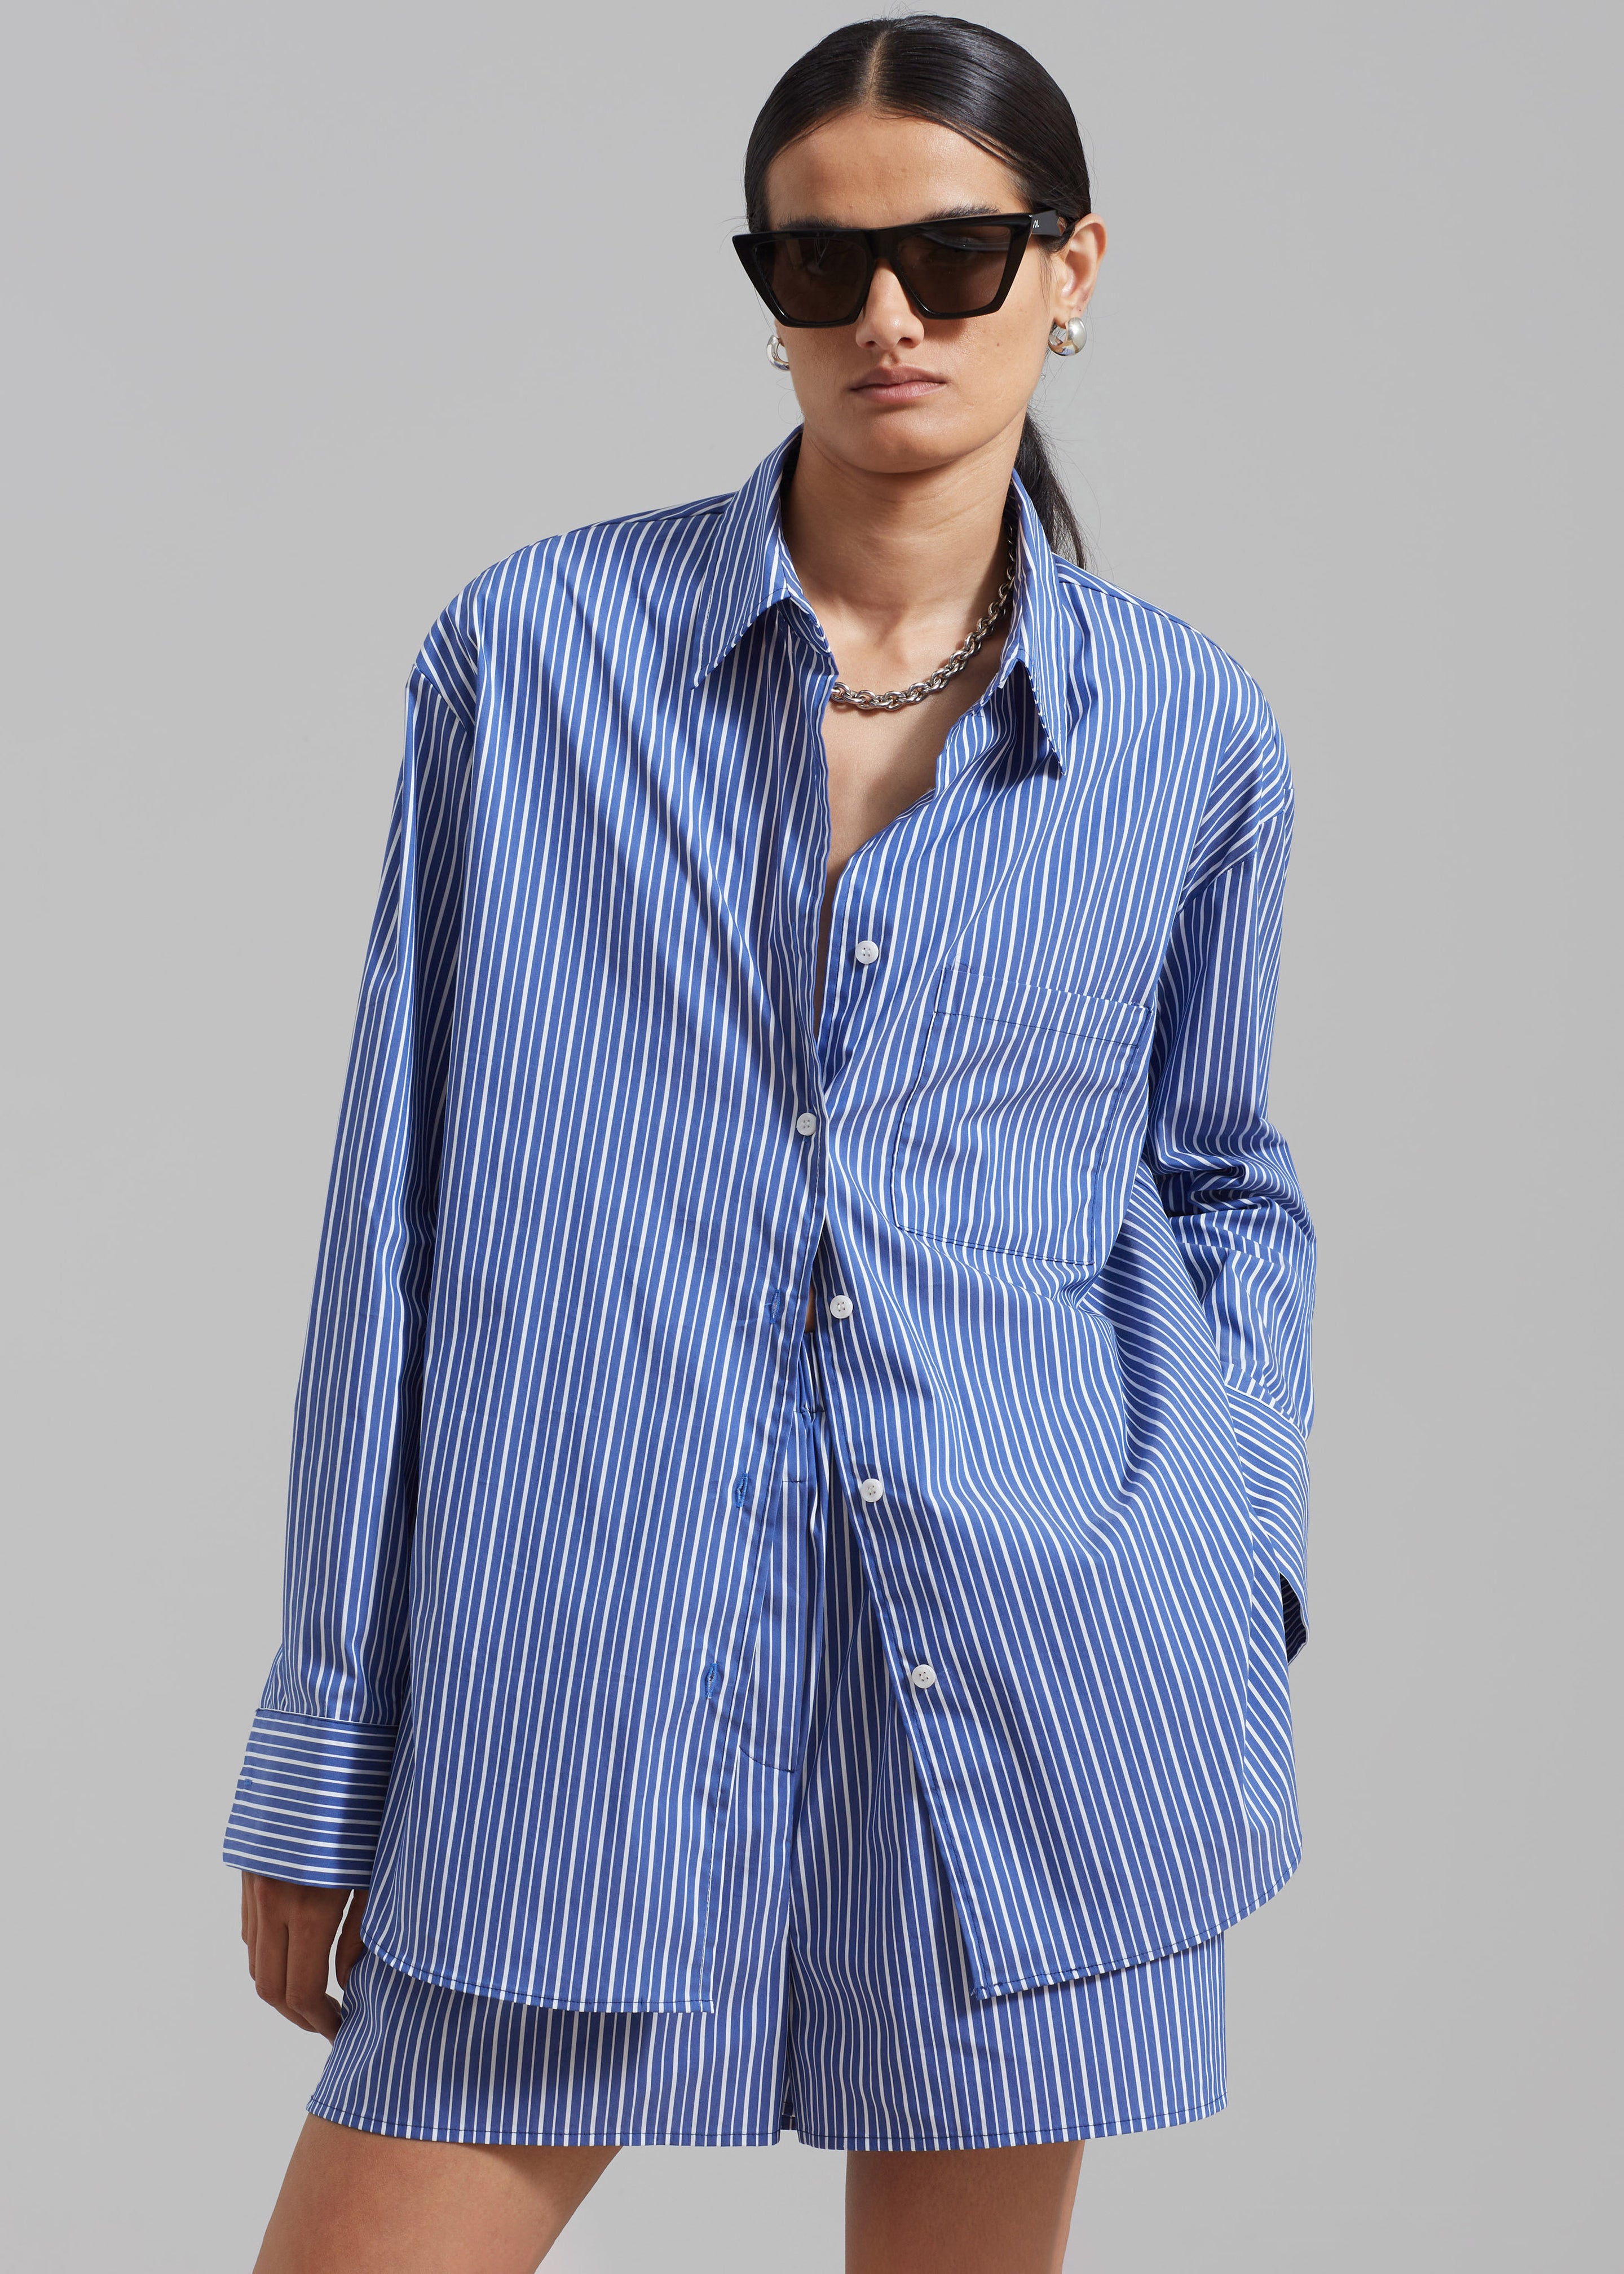 Mirca Pocket Shirt - Blue Multi Stripe - 5